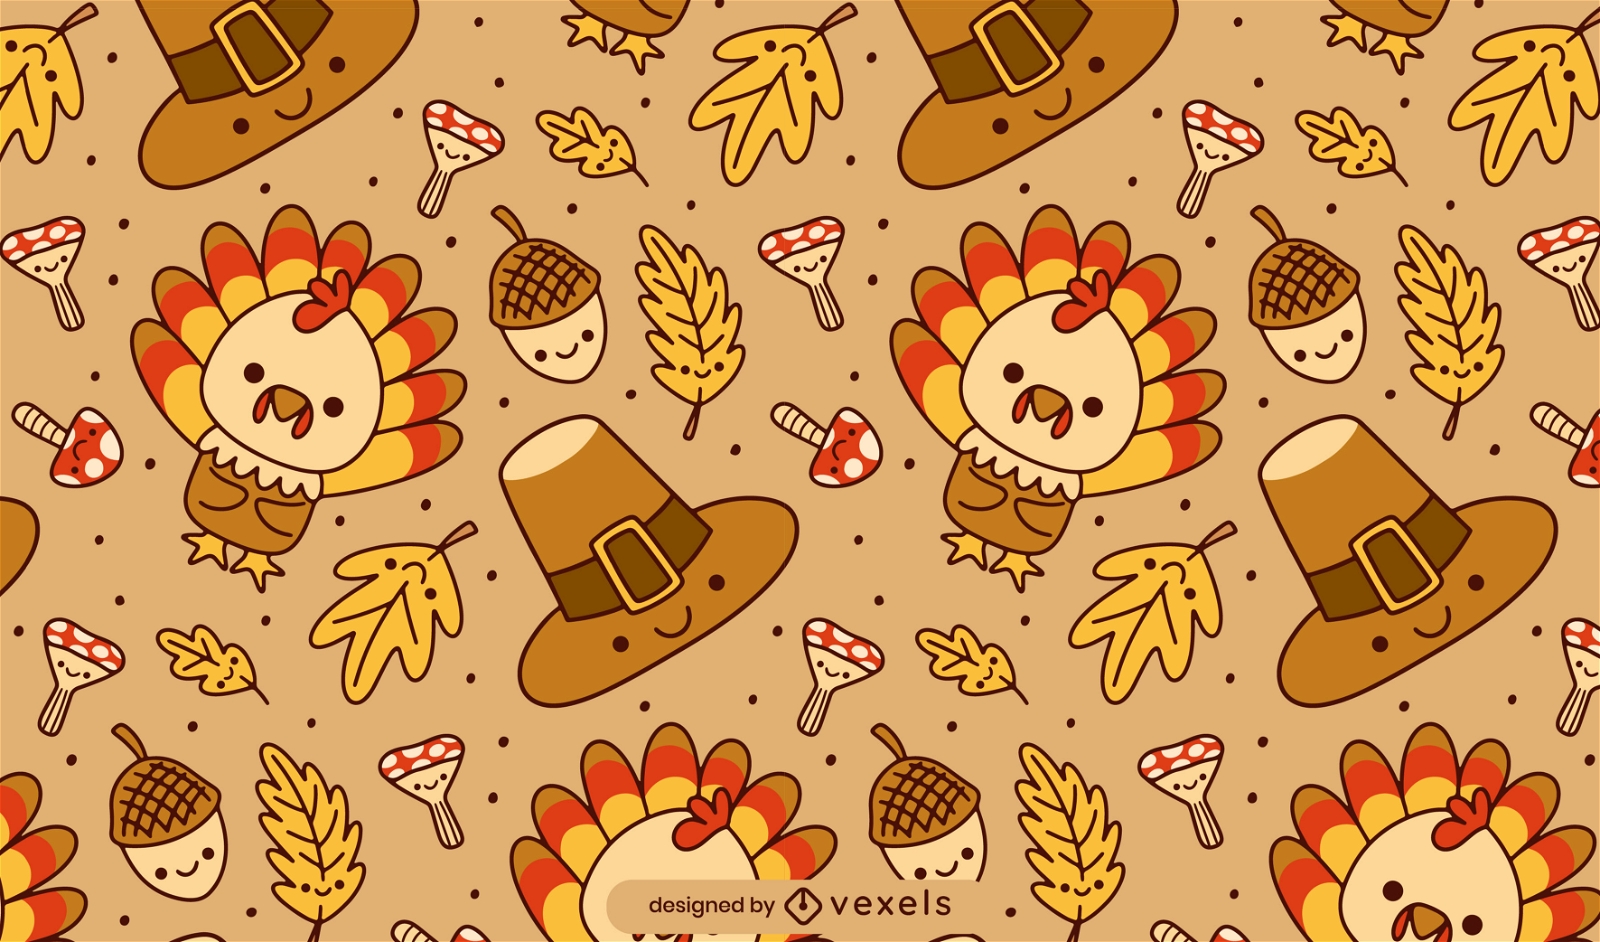 Cute Thanksgiving elements pattern design